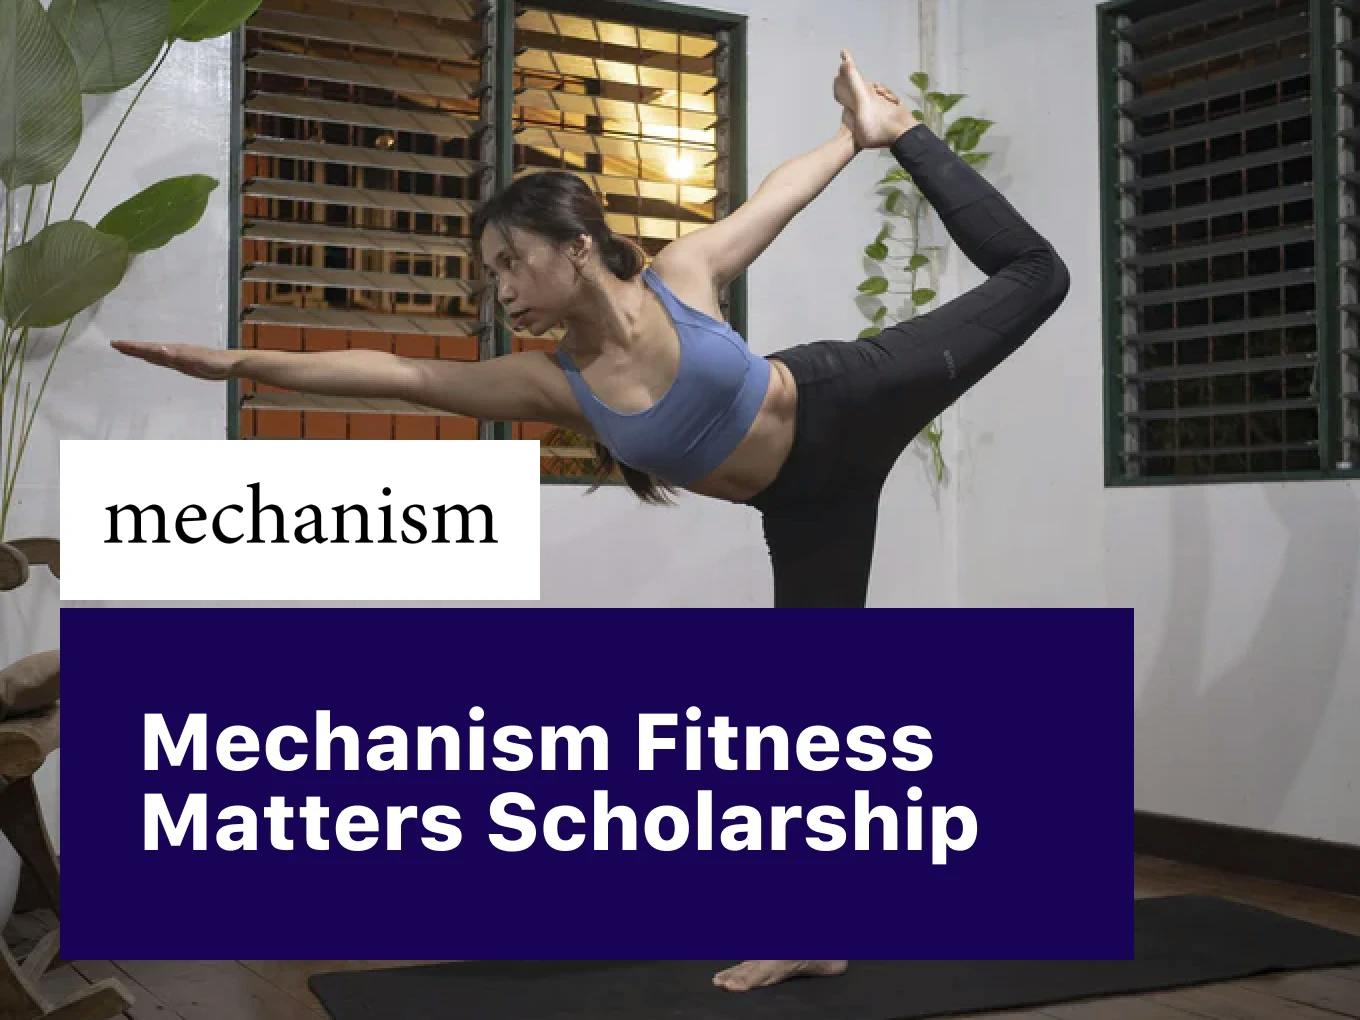 Mechanism Fitness Matters Scholarship